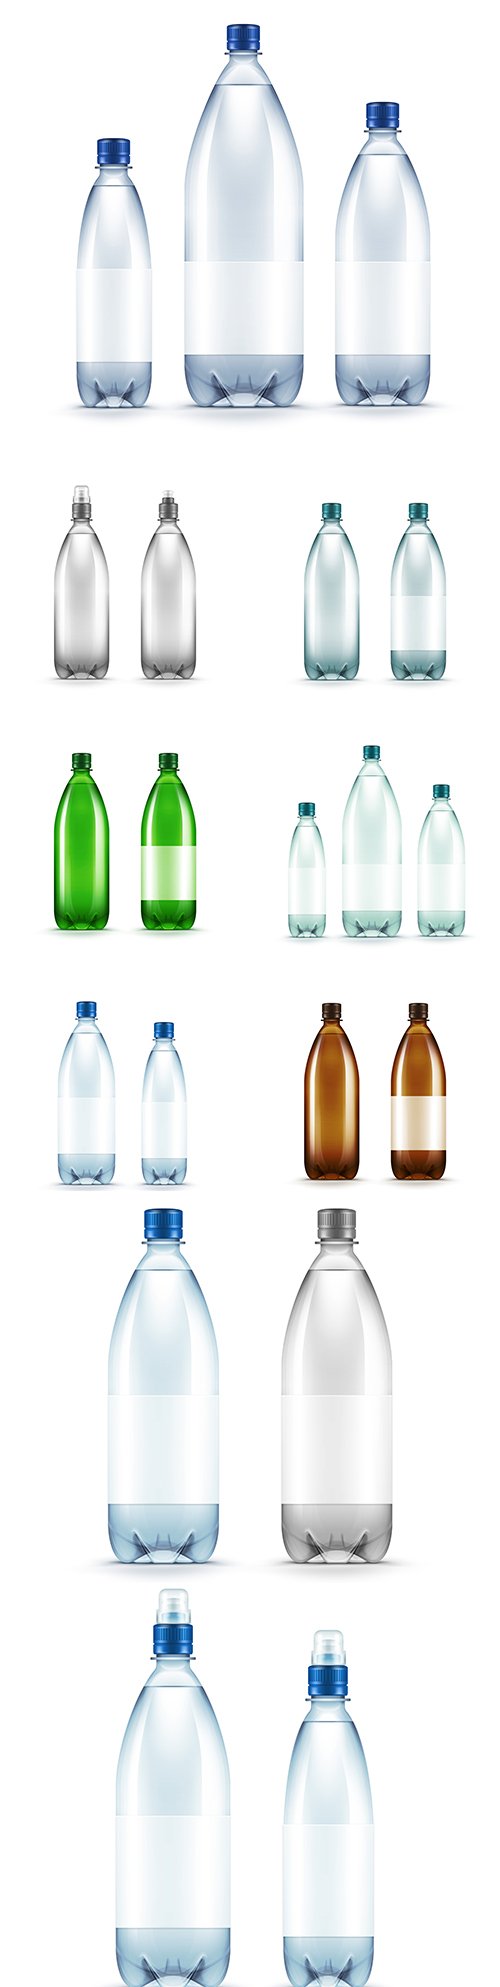 Empty plastic water bottle design template